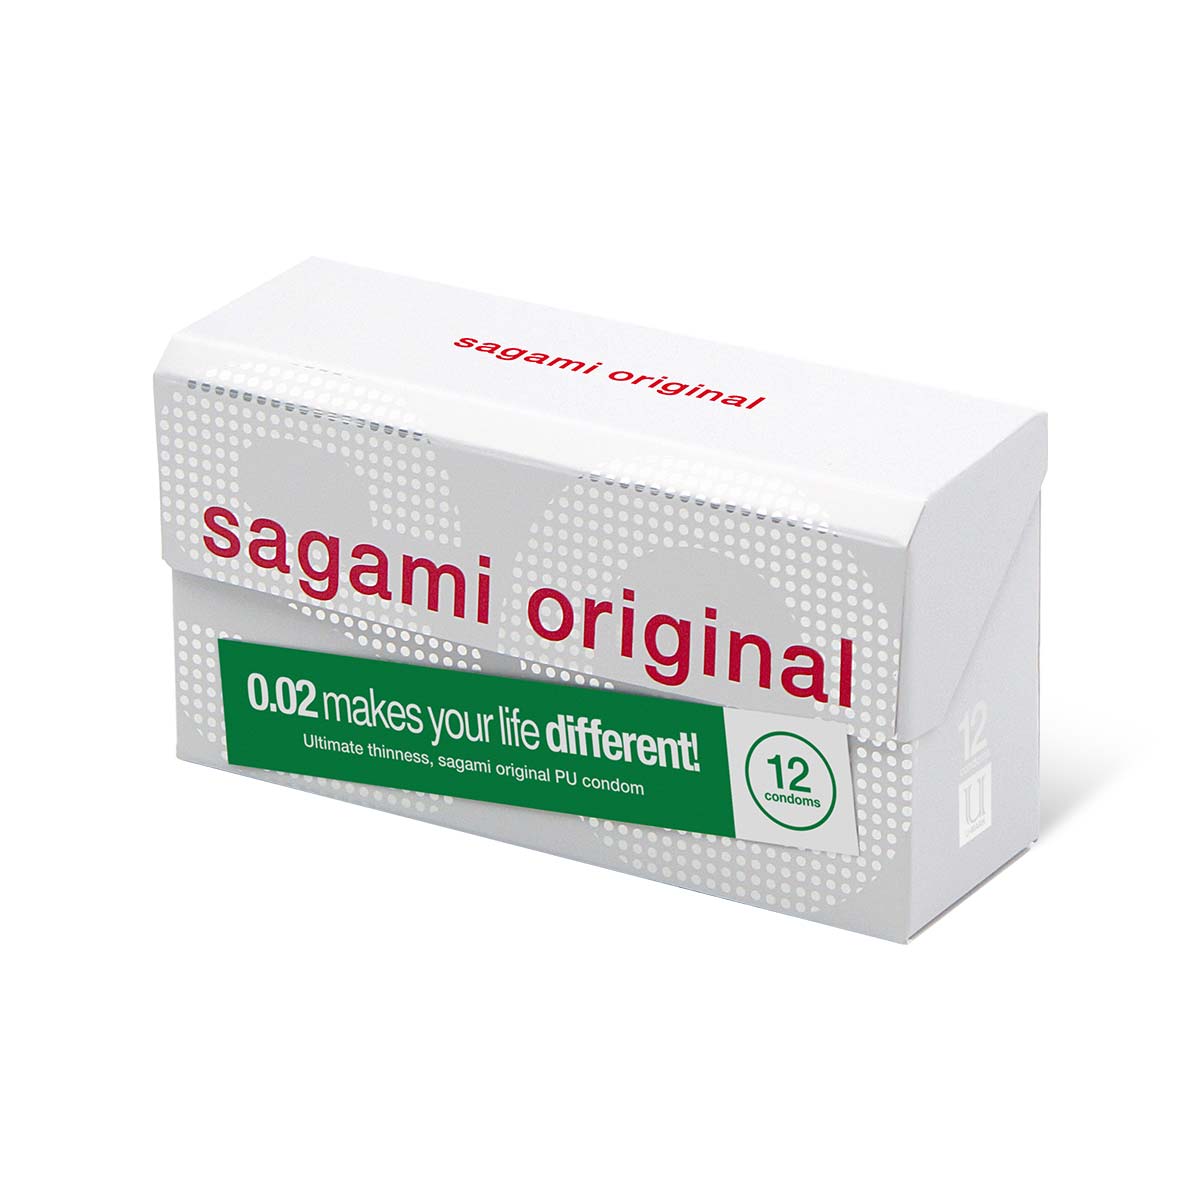 Sagami Original 0.02 (2nd generation) 12's Pack PU Condom (UK)-p_1